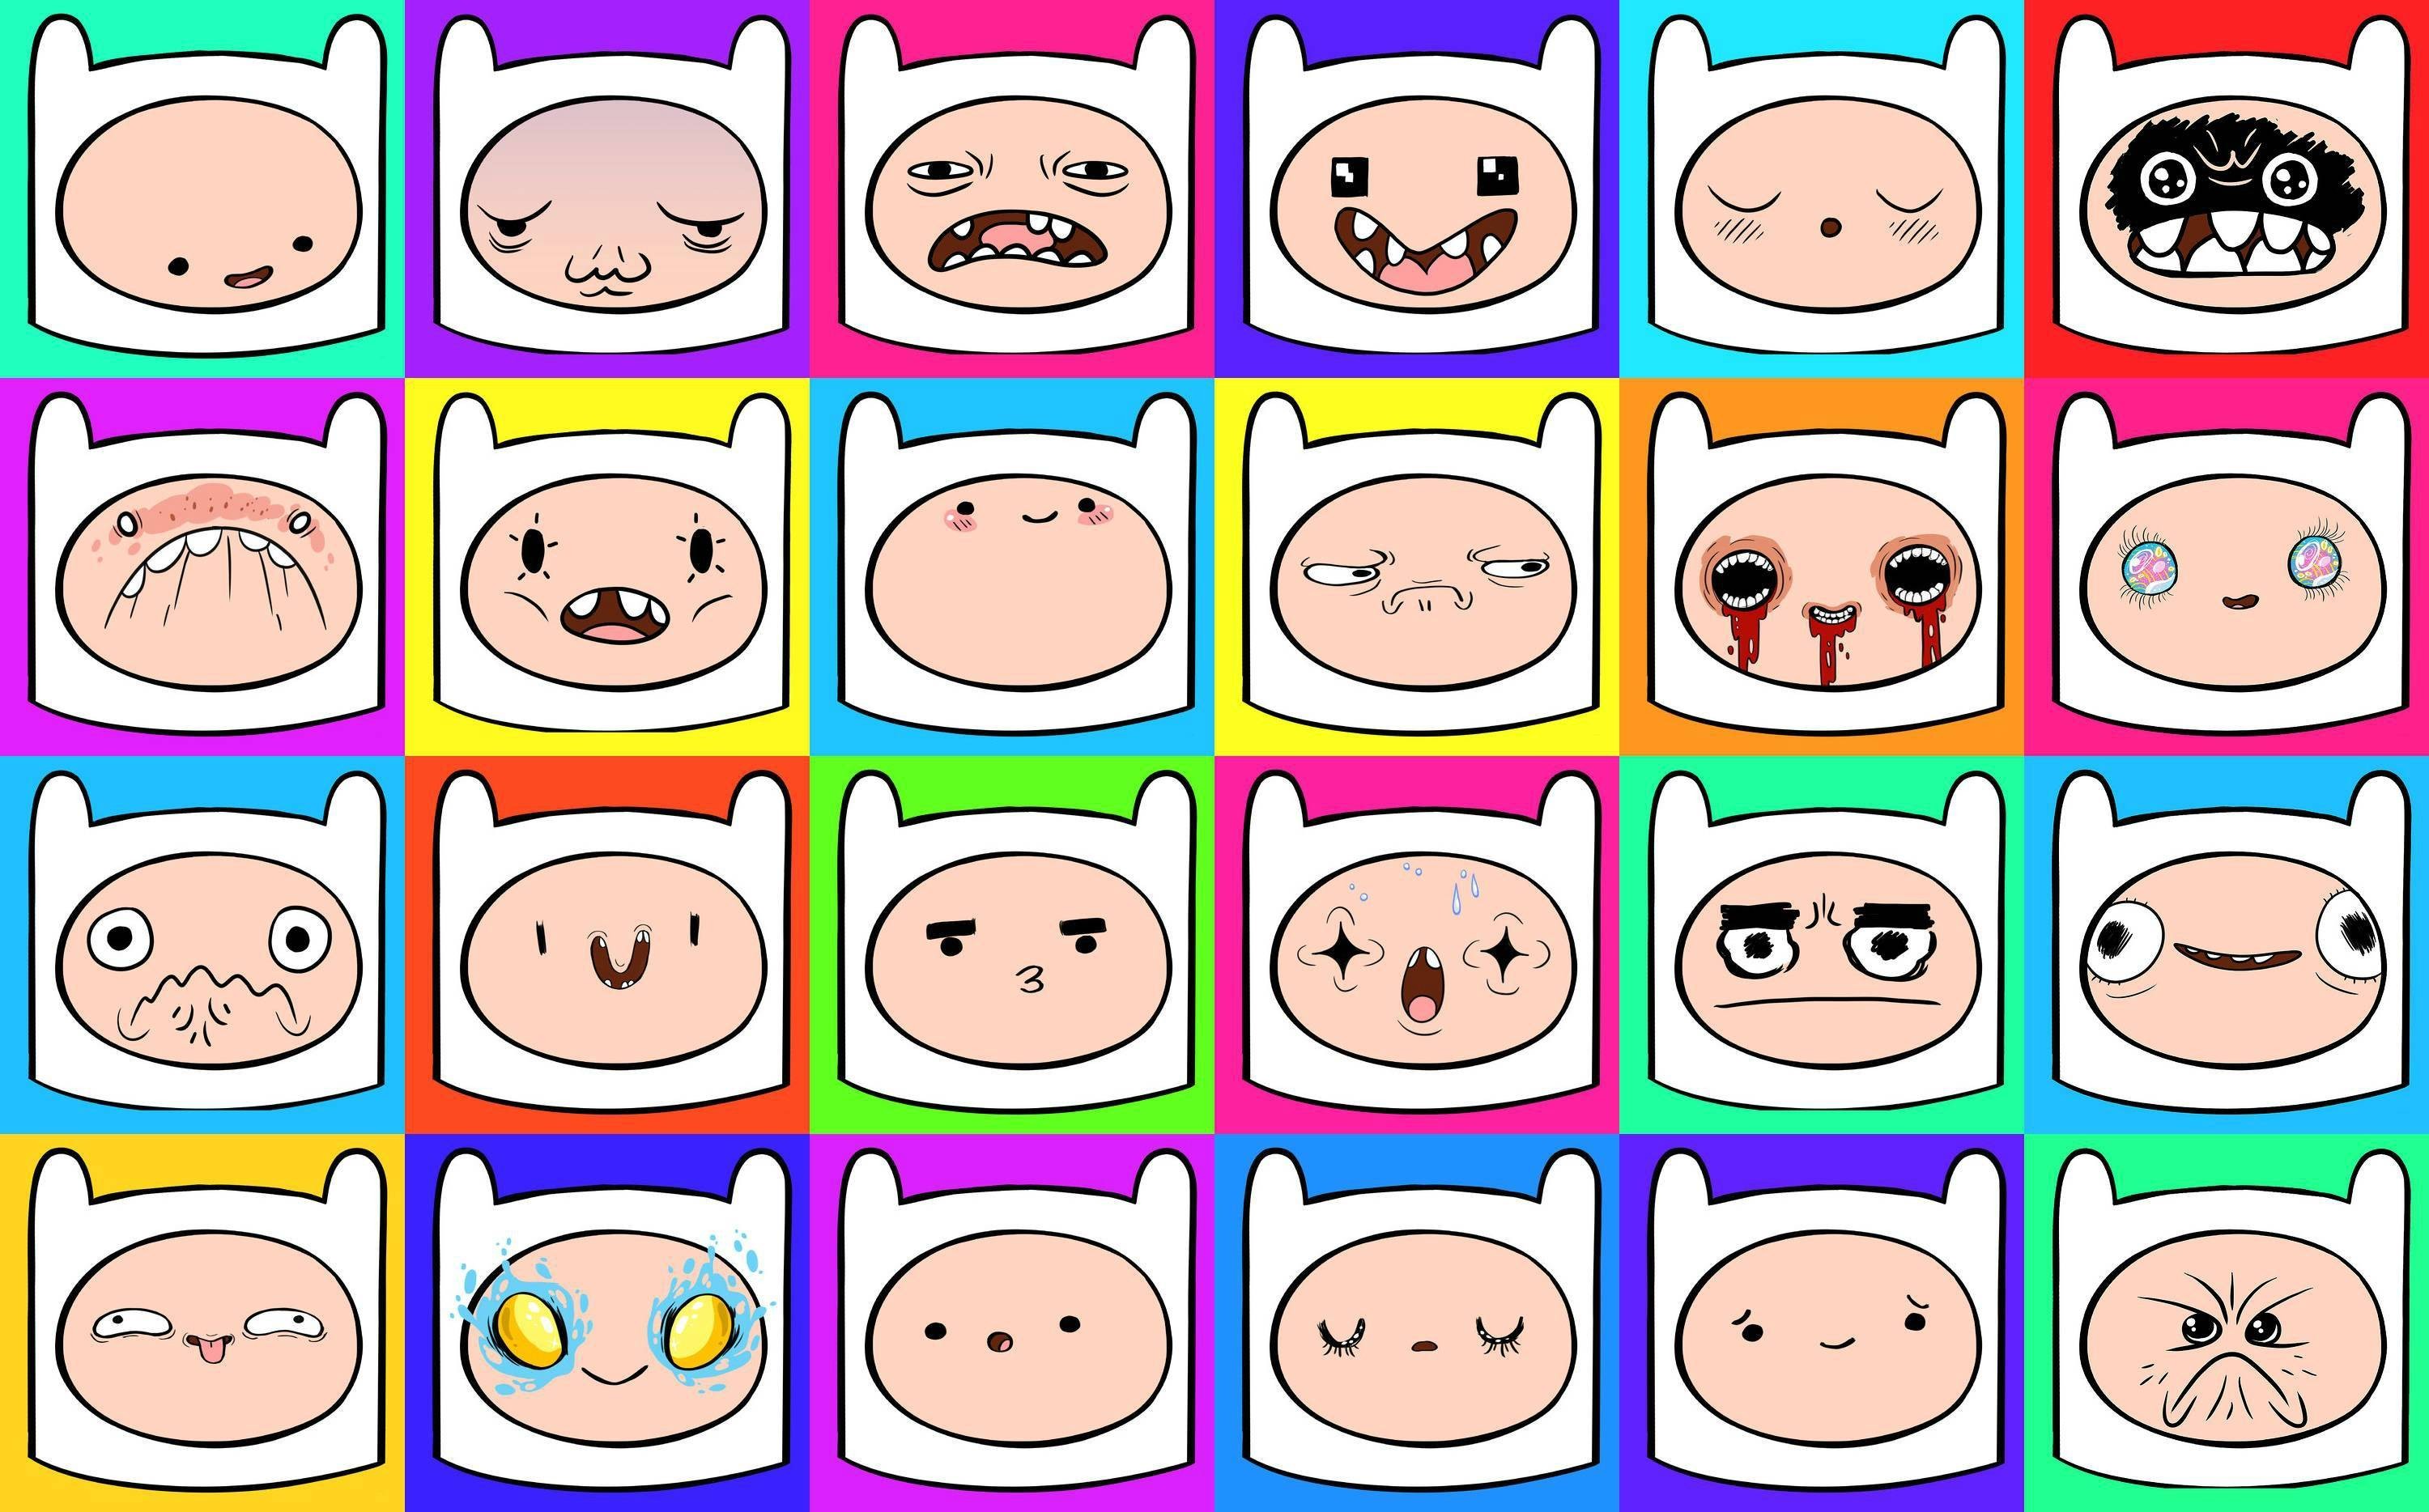 General 3000x1868 Adventure Time emotion Finn the Human cartoon TV series digital art